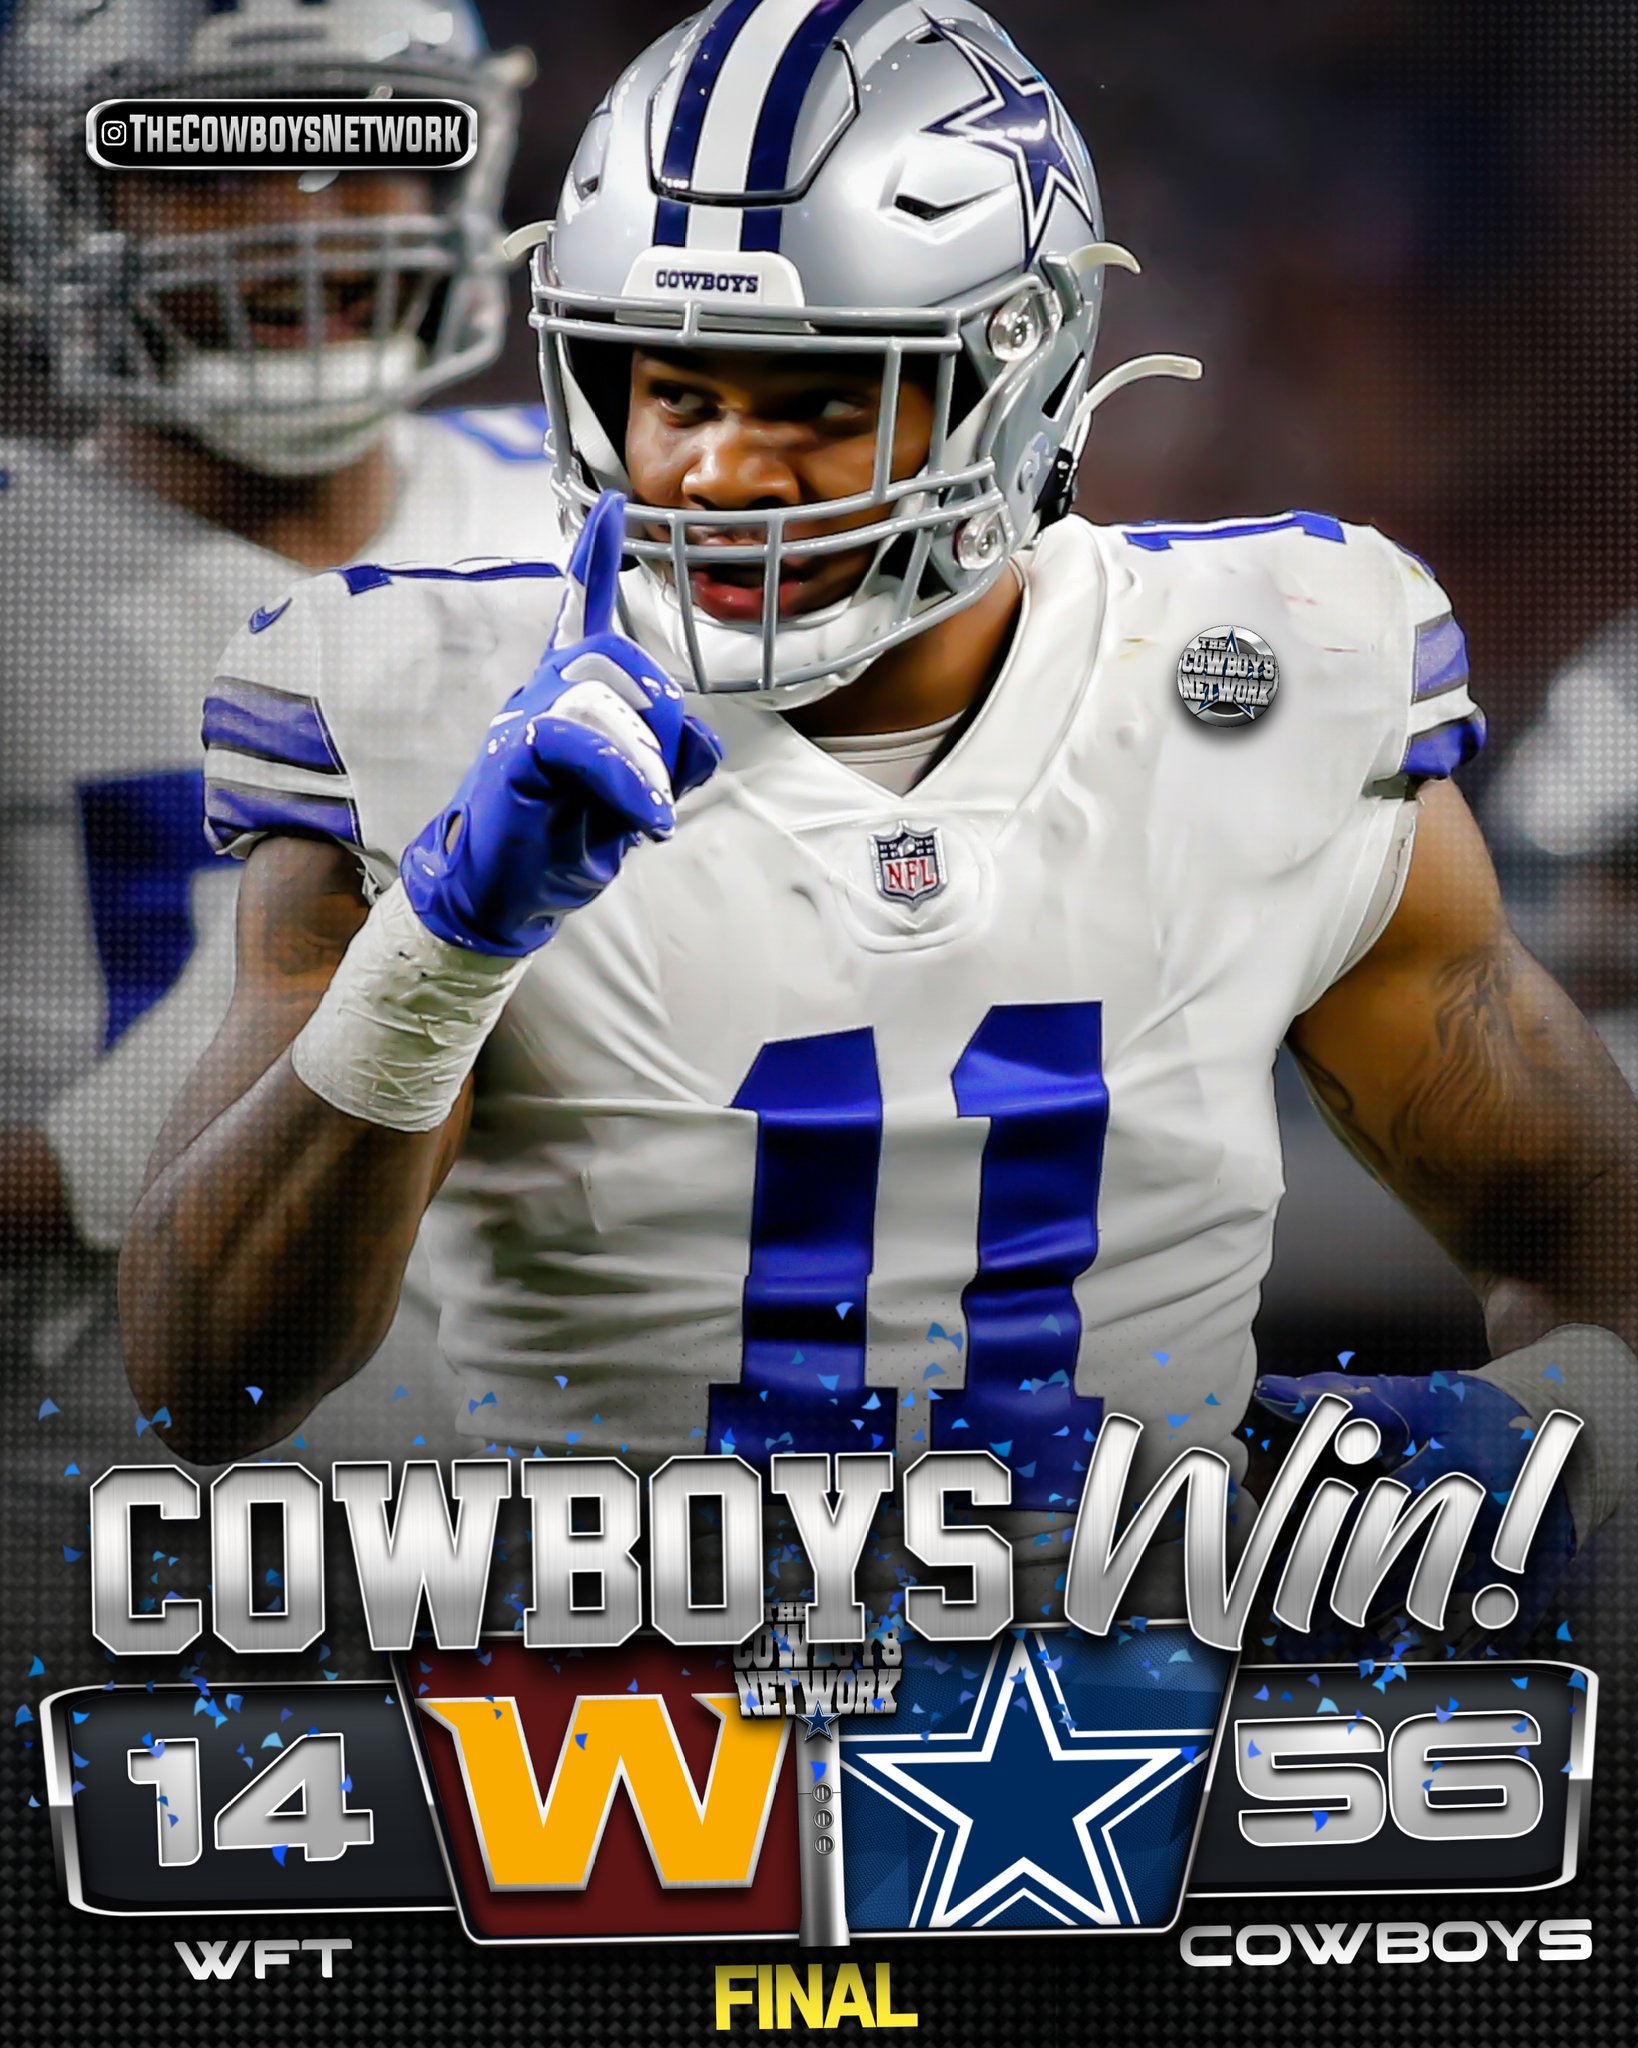 Dallas Cowboys Network on X: 'COWBOYS WIN! FINAL SCORE: Cowboys 56 vs WFT  14 ✭ #dallascowboys  / X